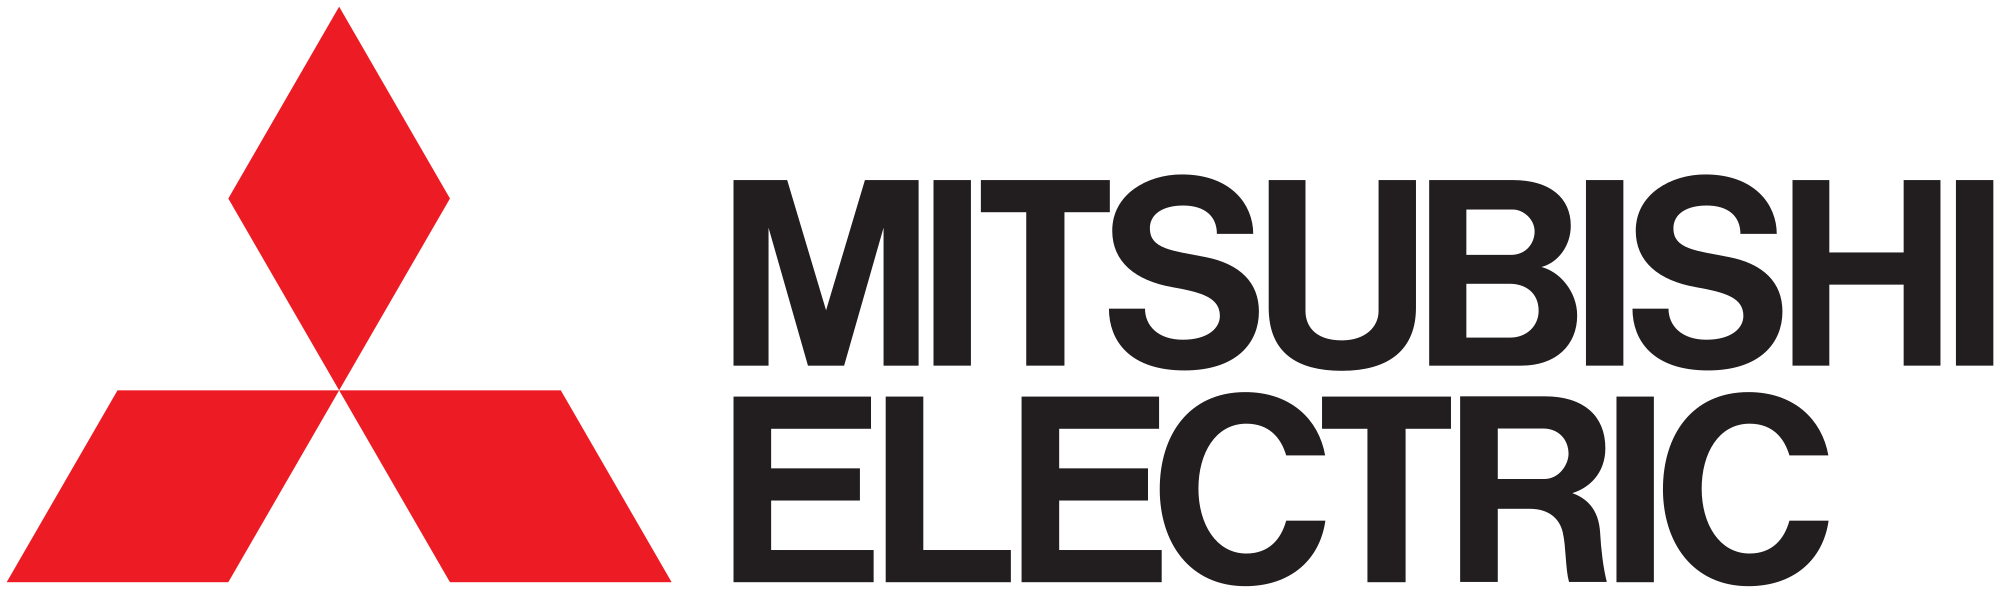 Mitsubishi Electric Logo - File:Mitsubishi Electric logo.svg - Wikimedia Commons